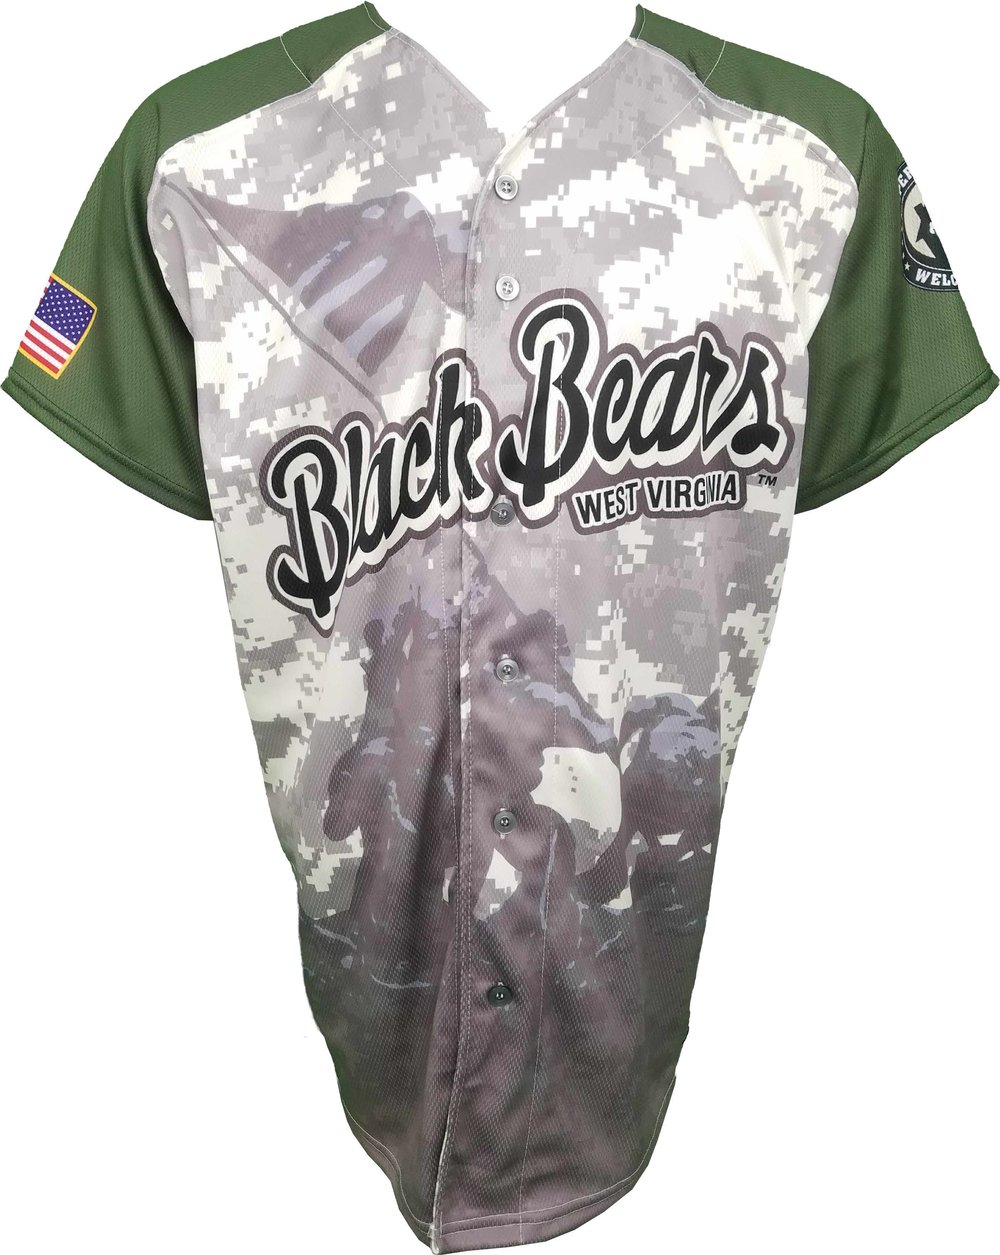 military bears jersey